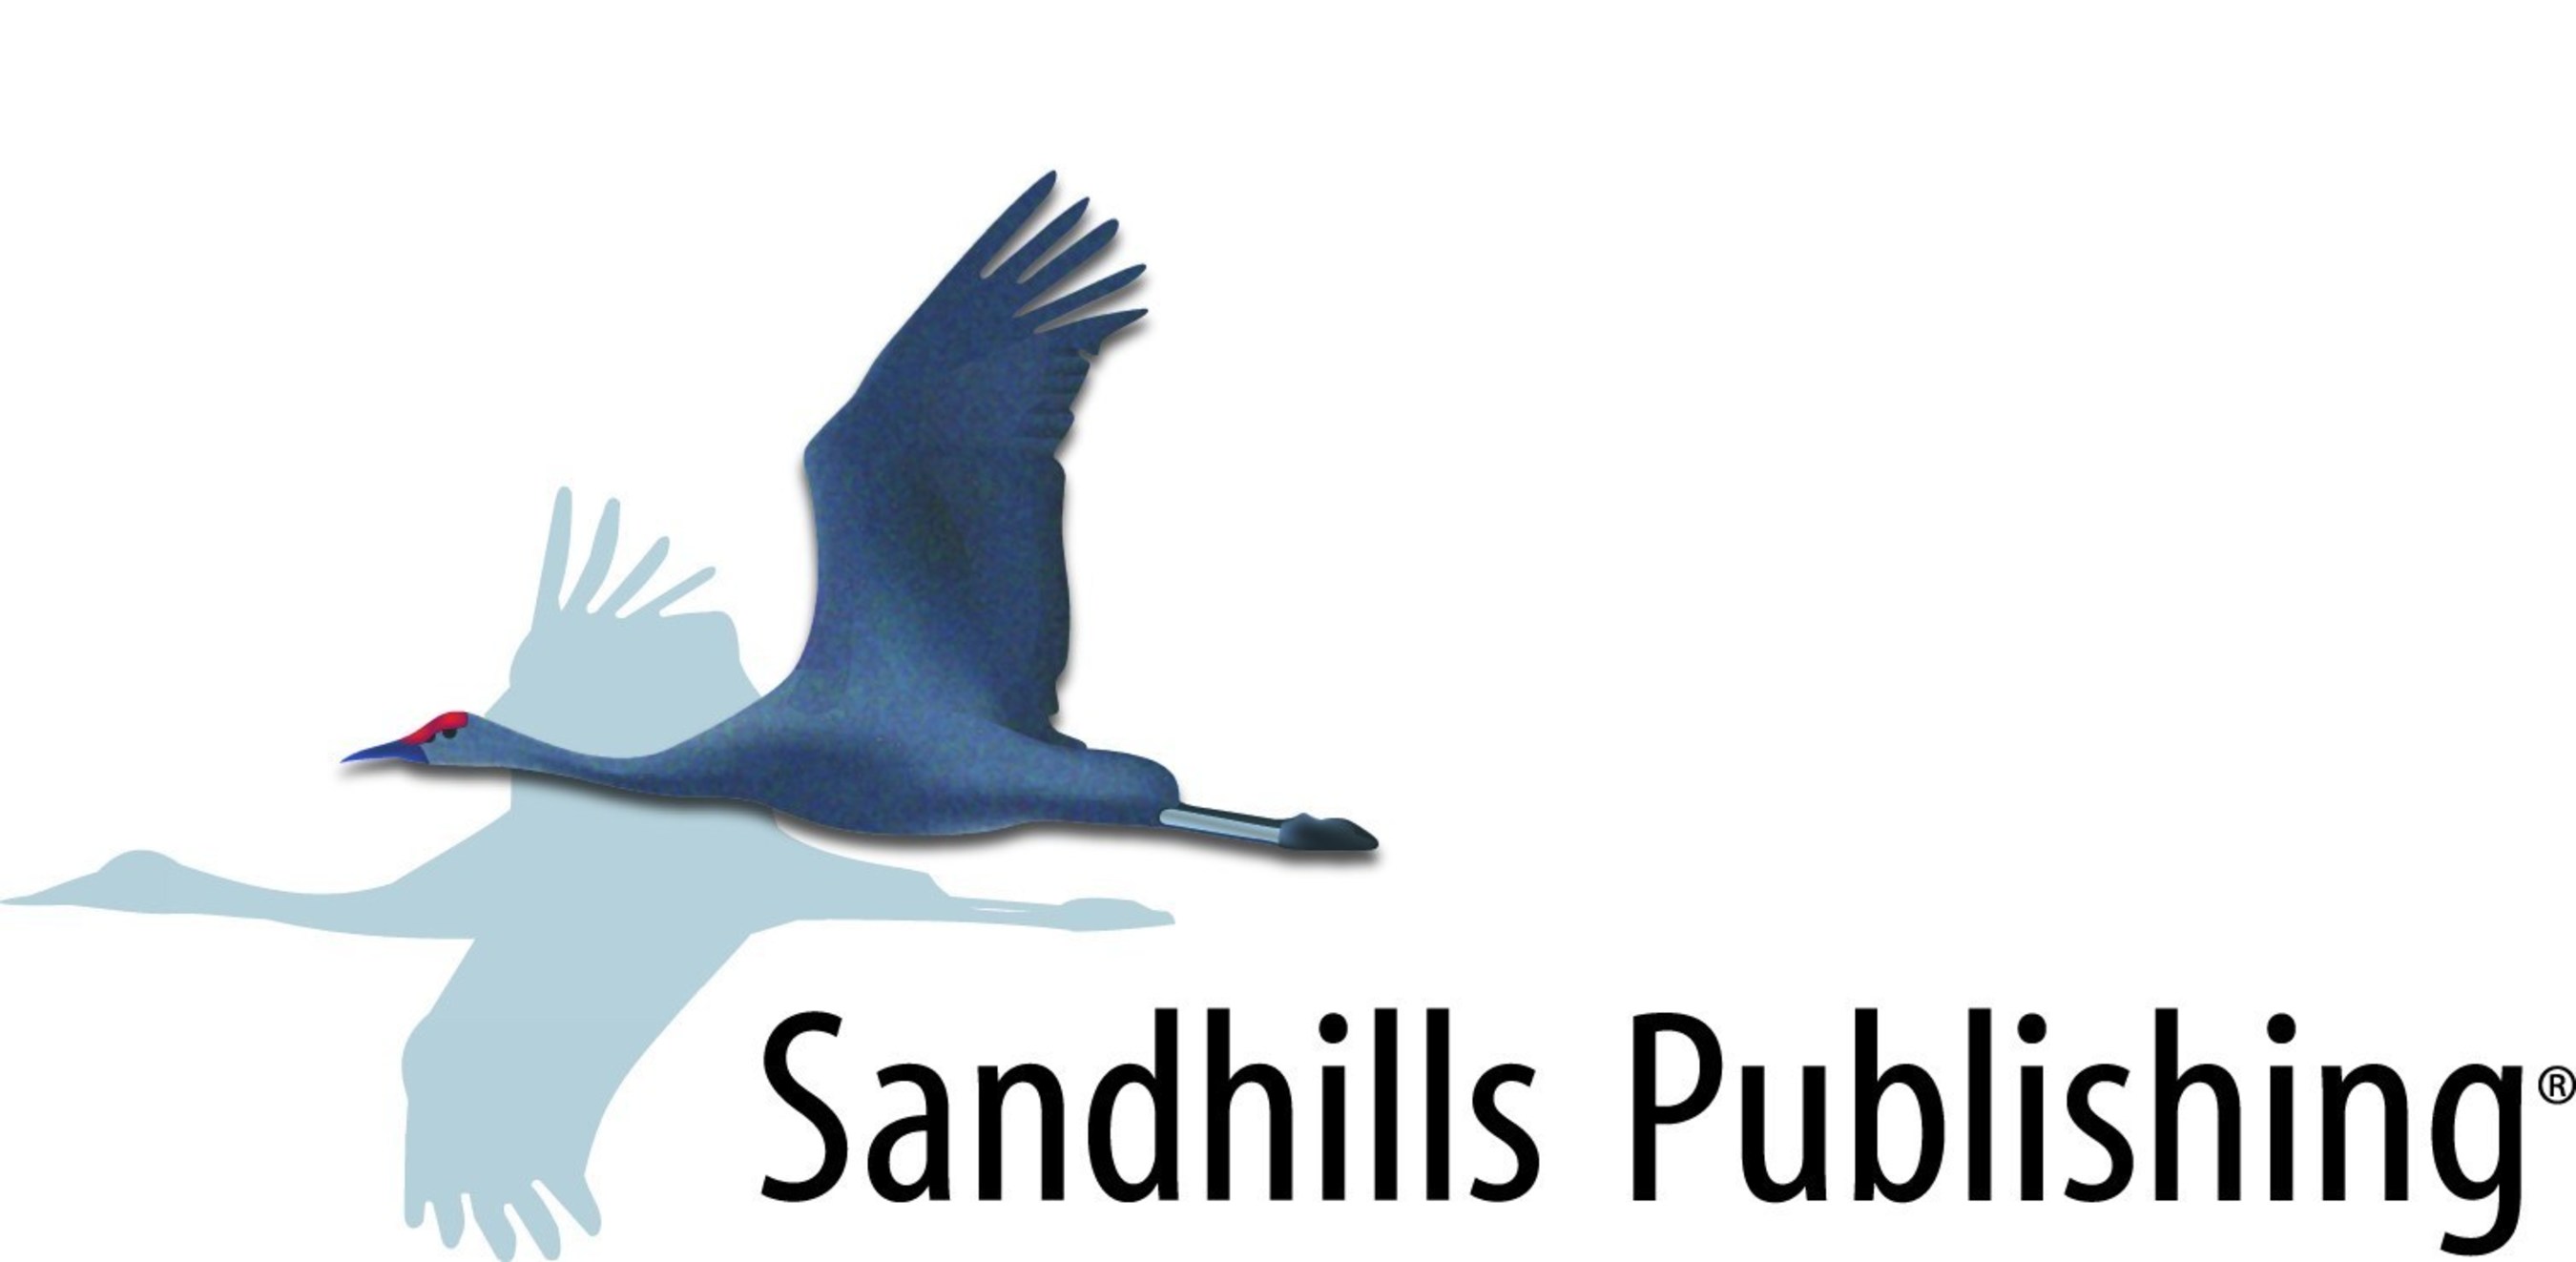 Sandhills Publishing - we are the cloud. www.sandhills.jobs